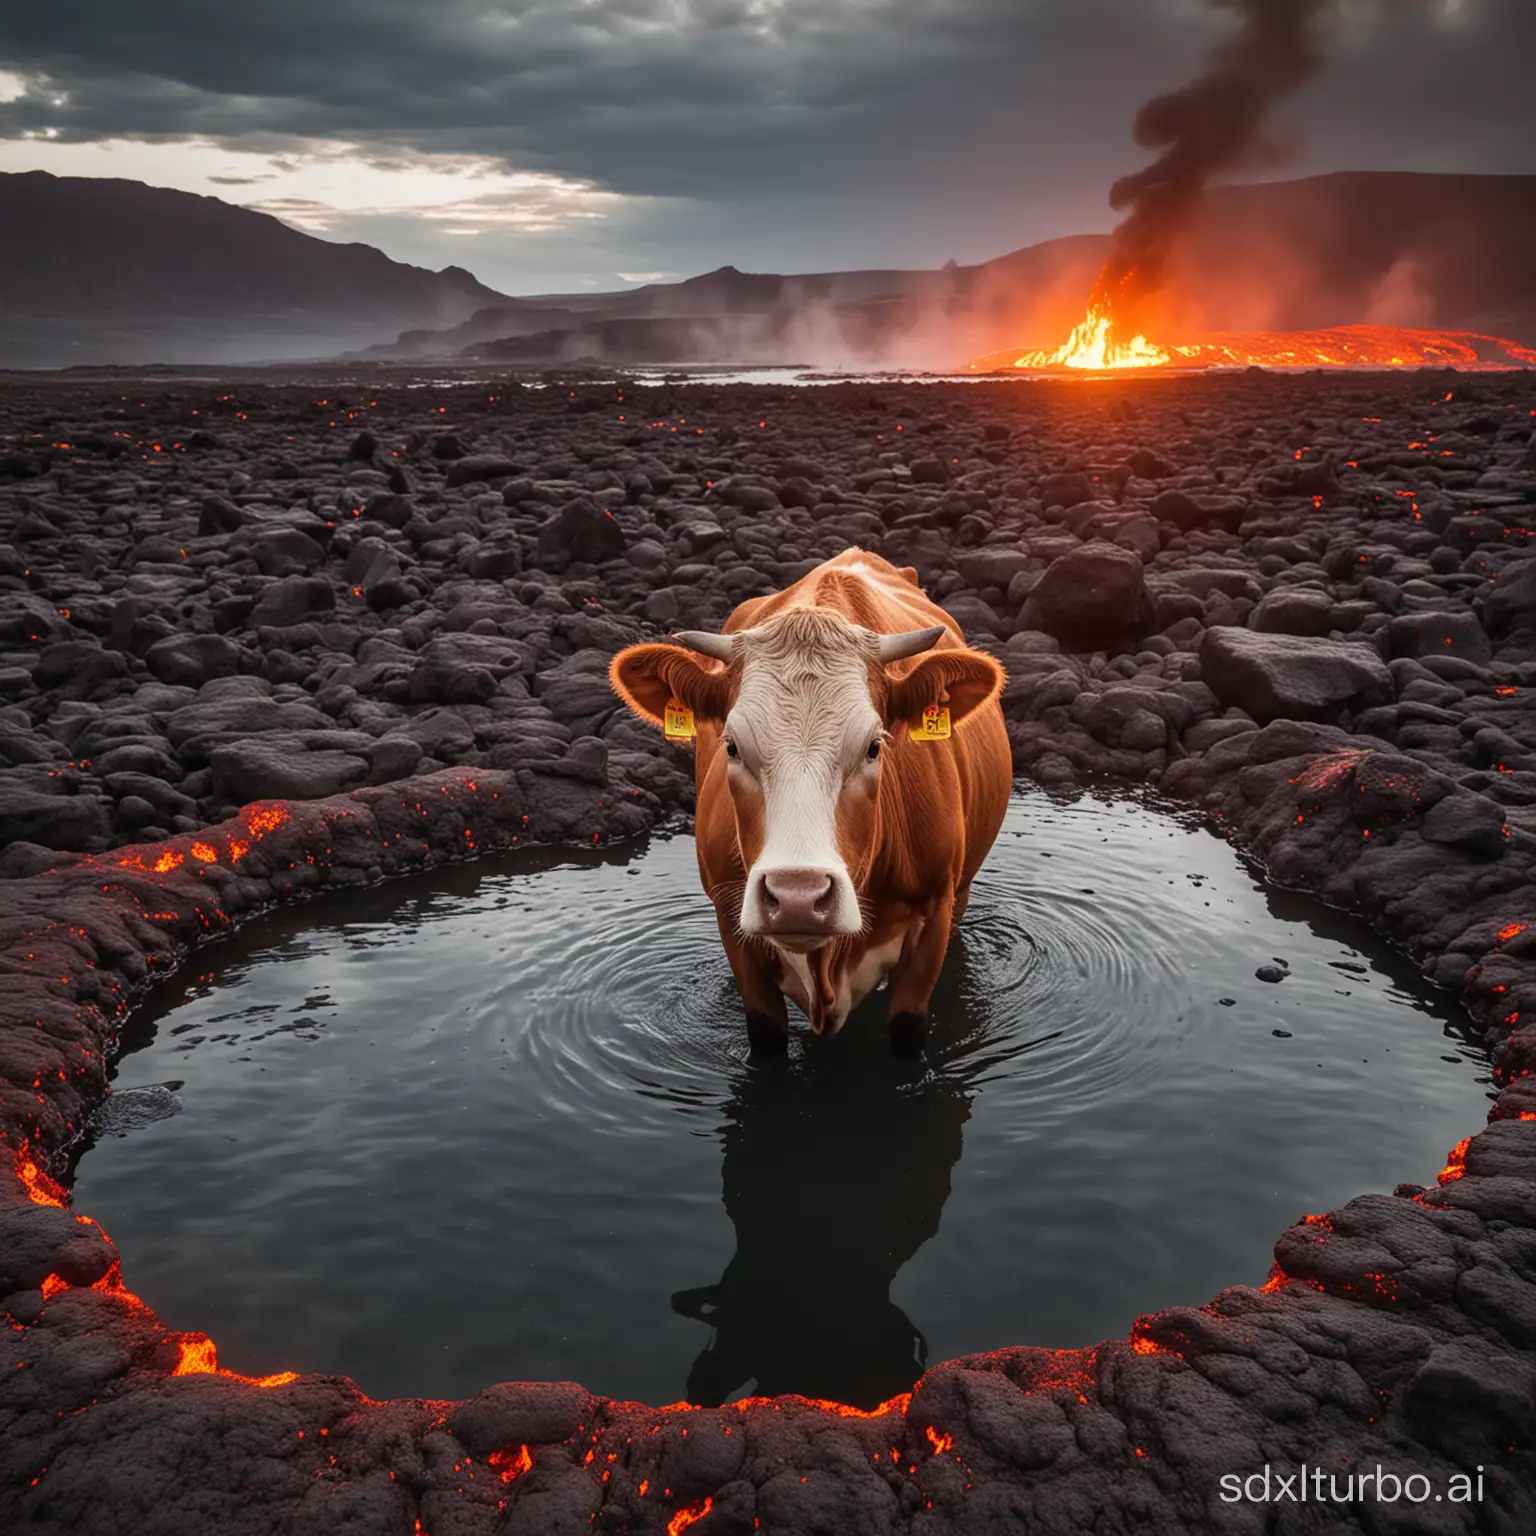 Cow-Bathing-in-Lava-Lake-Under-Suns-Intense-Heat